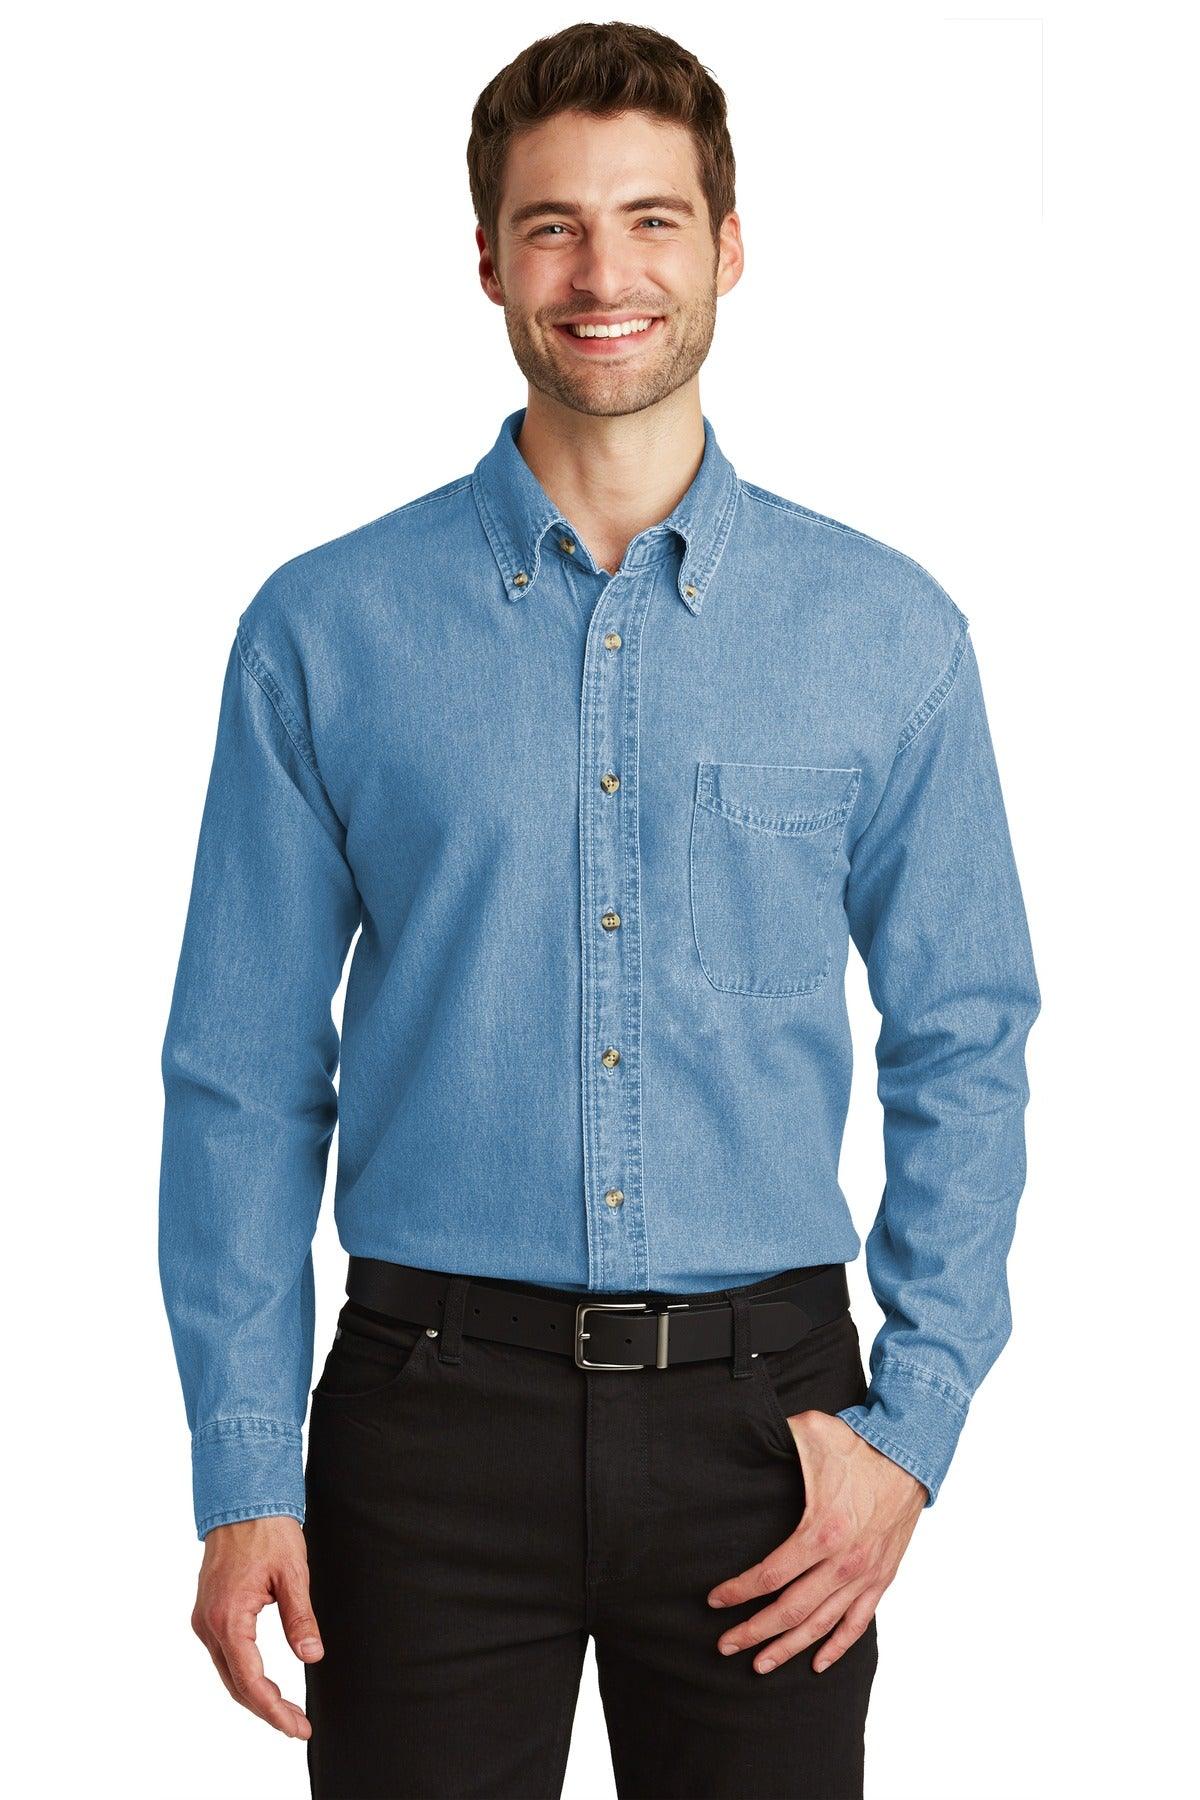 Port Authority Tall Long Sleeve Denim Shirt. TLS600 - Dresses Max